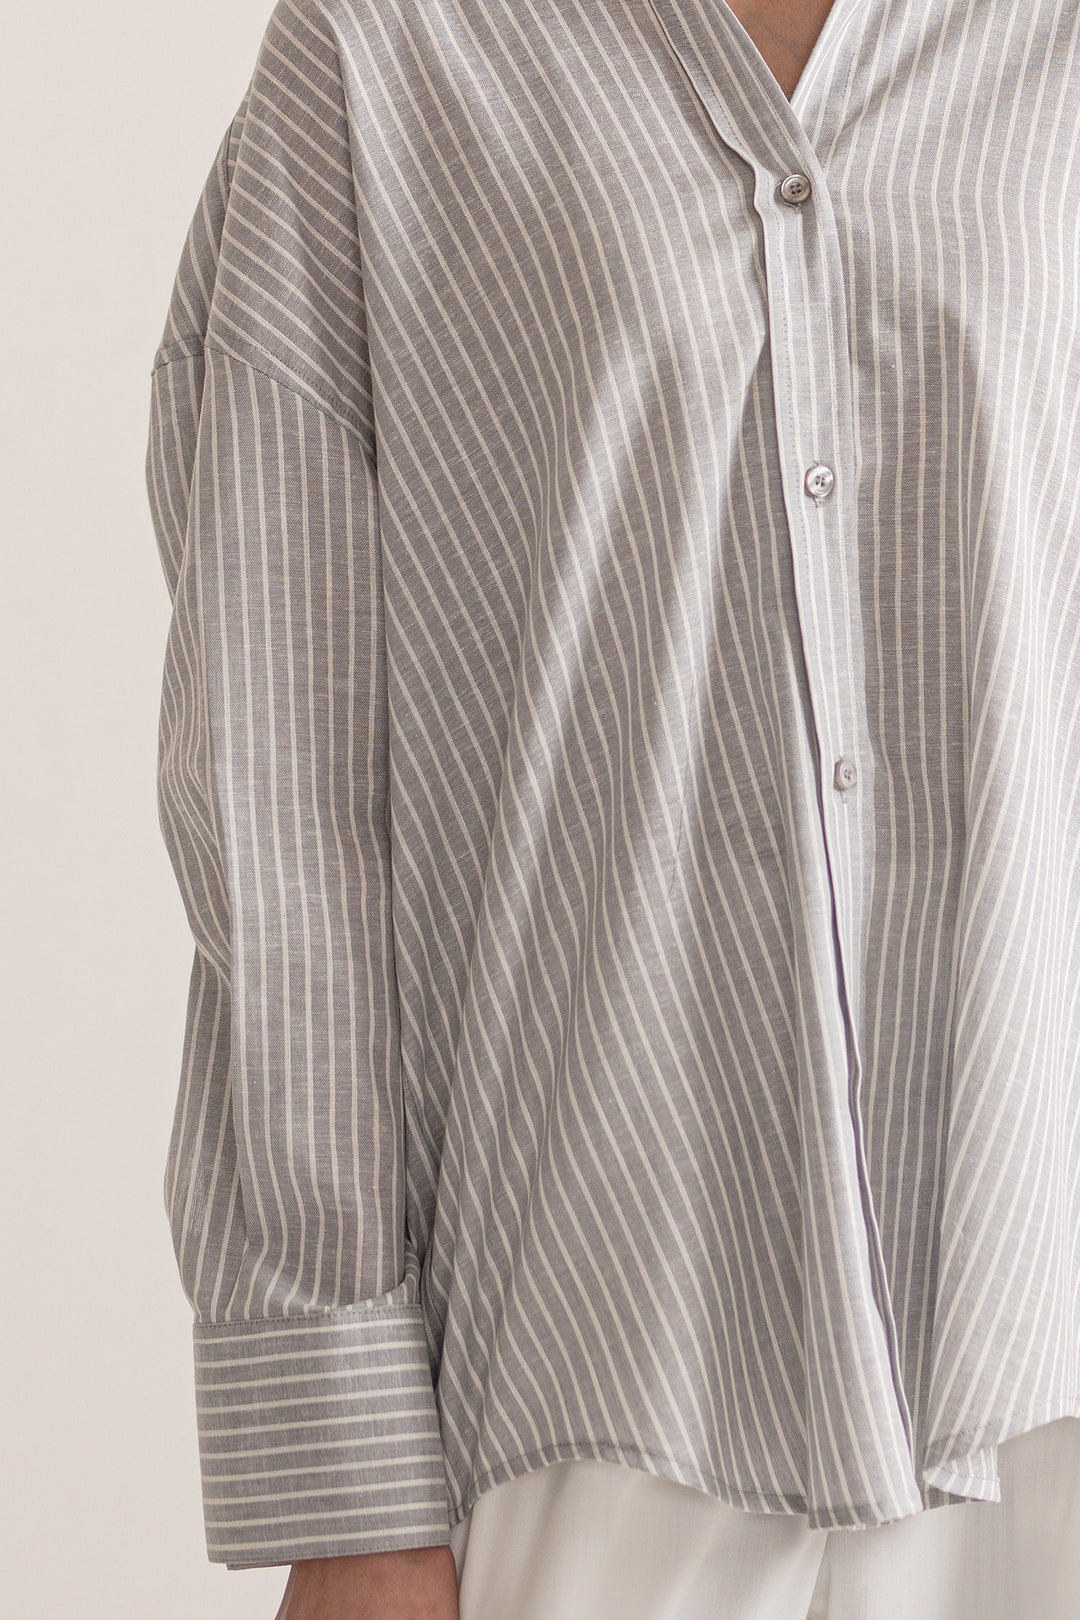 White & Grey Striped Linen Shirt Price